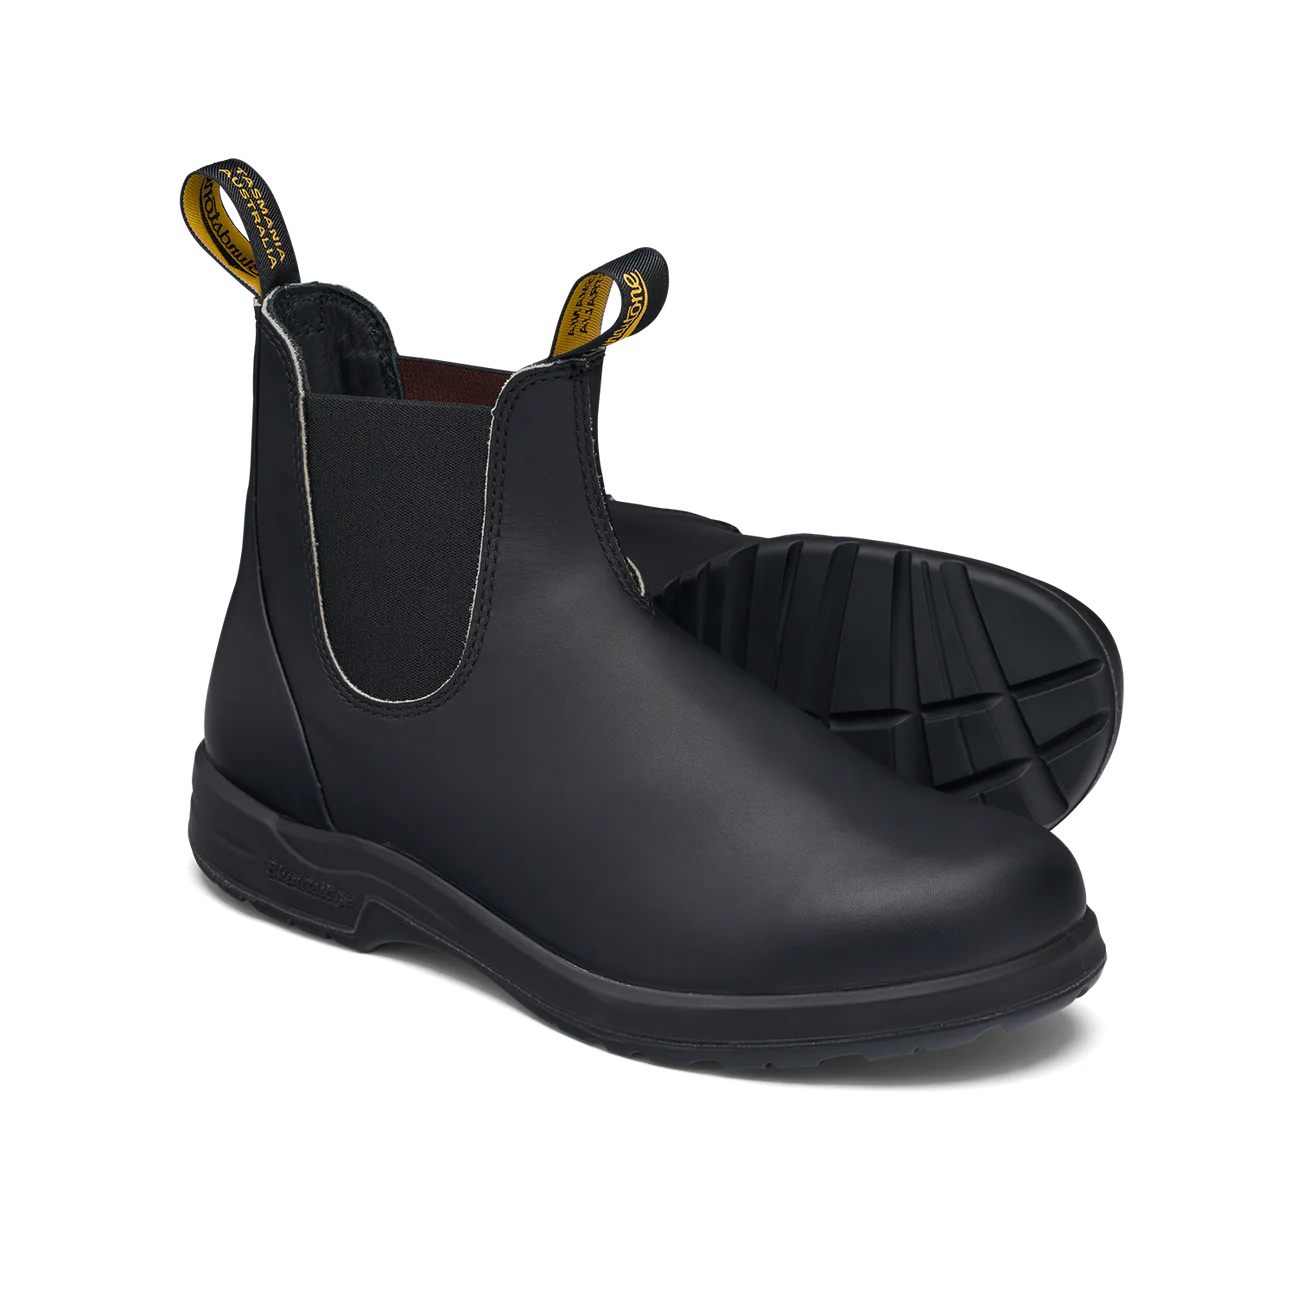 Blundstone 2058 All-Terrain Classic Boots